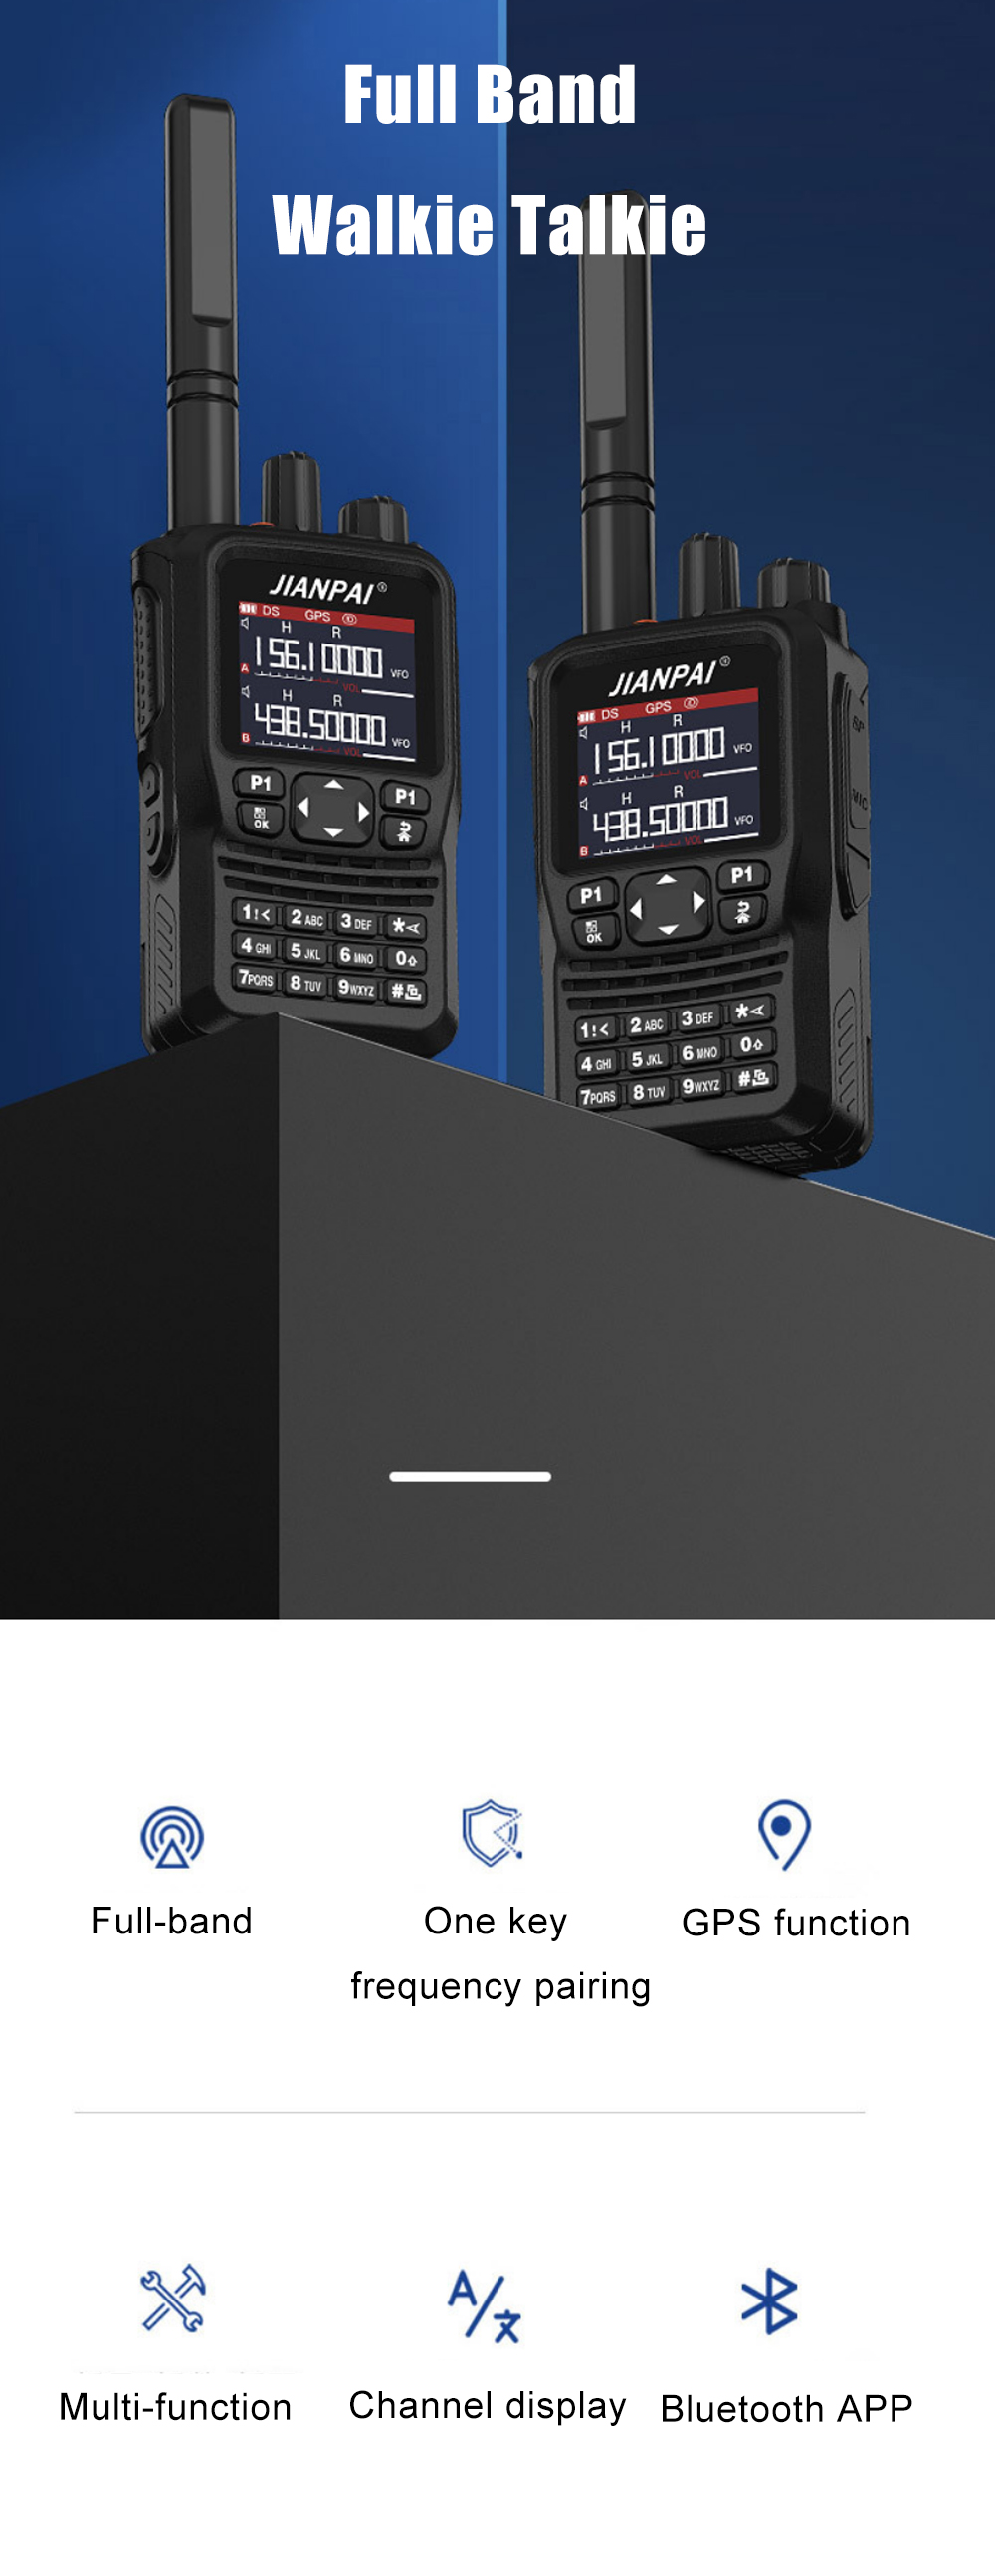 JIANPAI-8800-Plus-10W-5800mAh-Walkie-Talkie-16-Channel-Dual-Band-High-Power-GPS-Positioning-Type-C-C-1898398-1